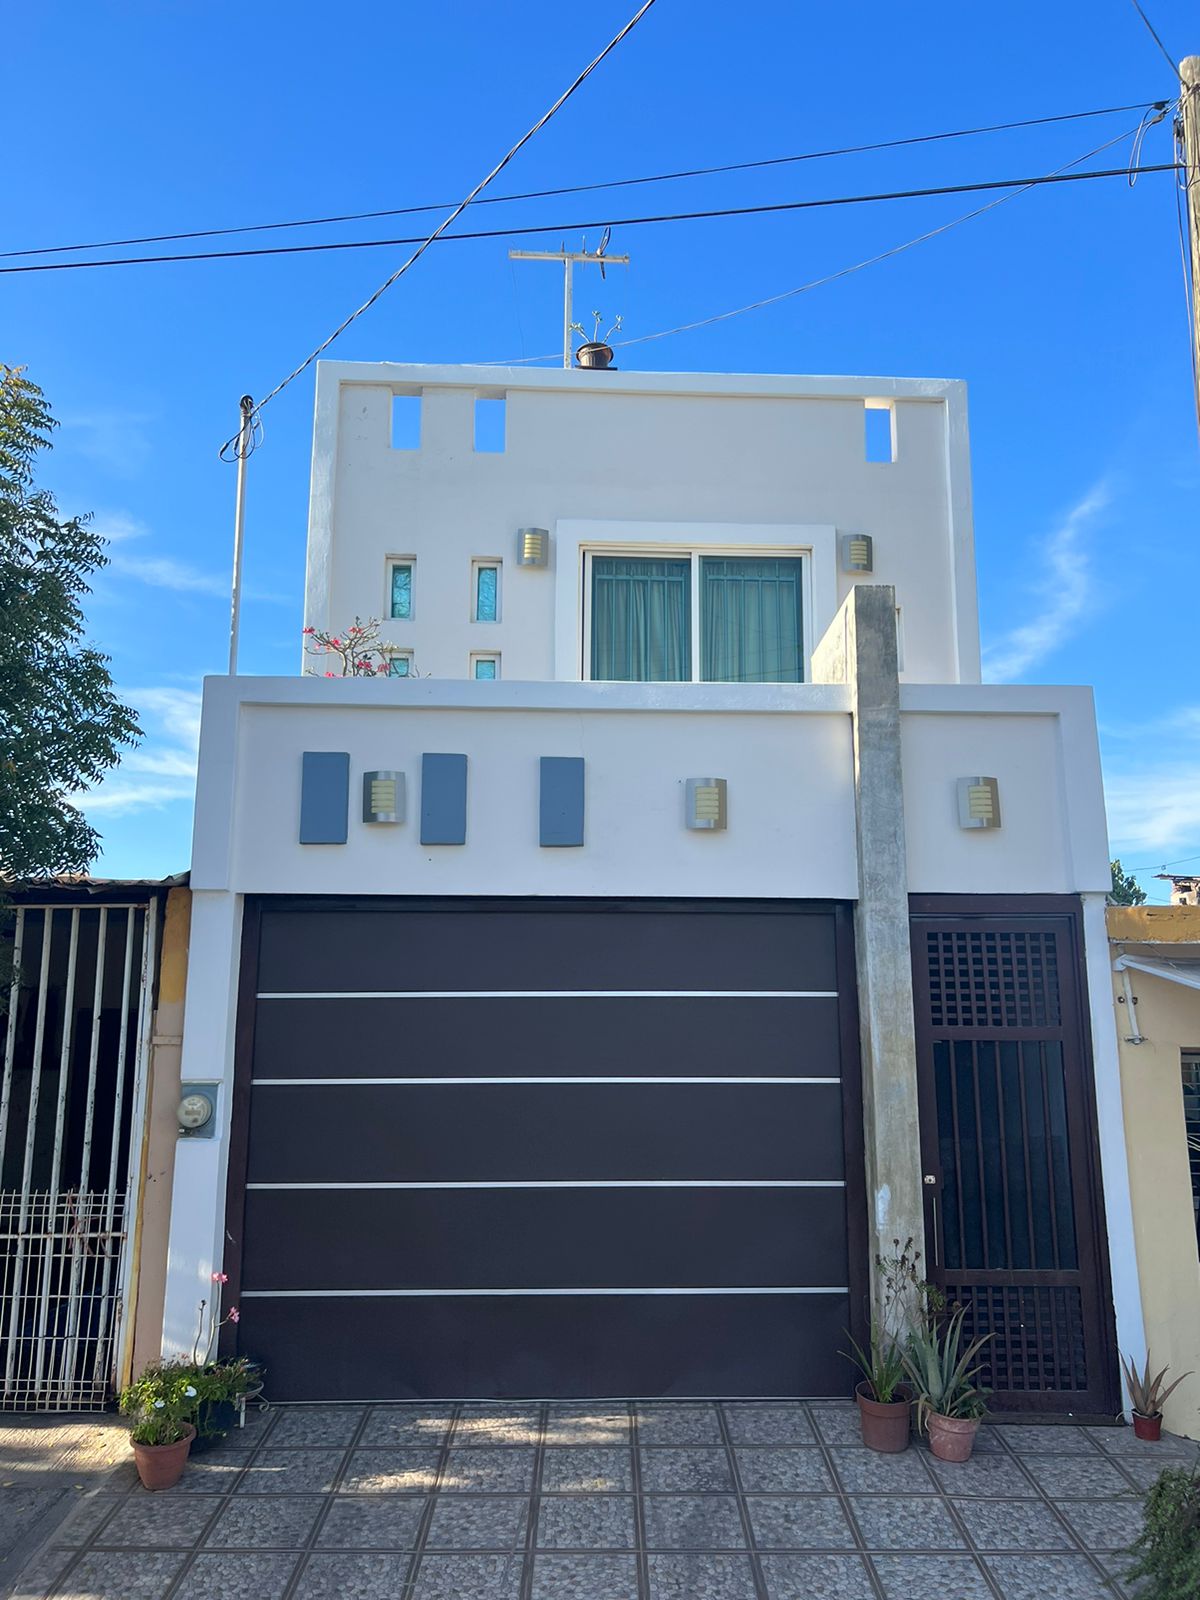 Casa en venta en Col. Emiliano Zapata en Culiacán, Sinaloa.